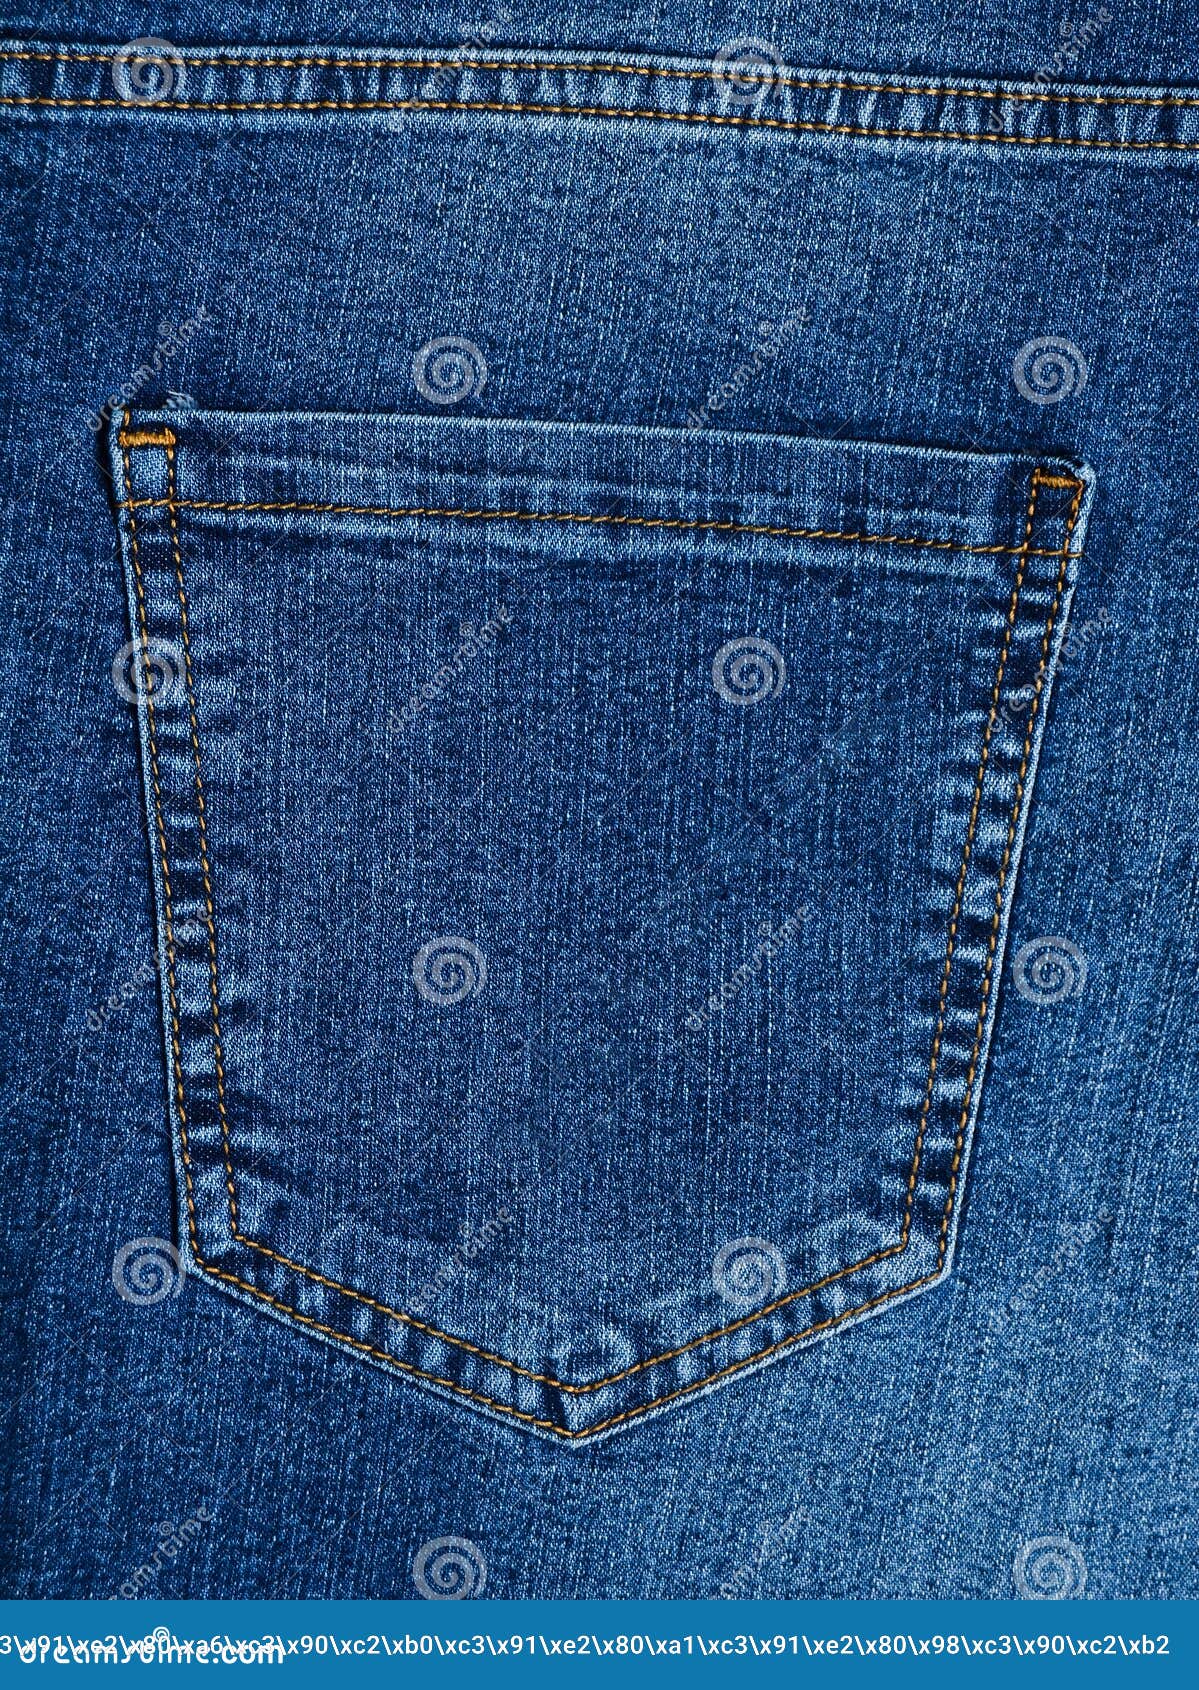 Denim Texture. Back Pocket of the Jeans Stock Image - Image of blue ...